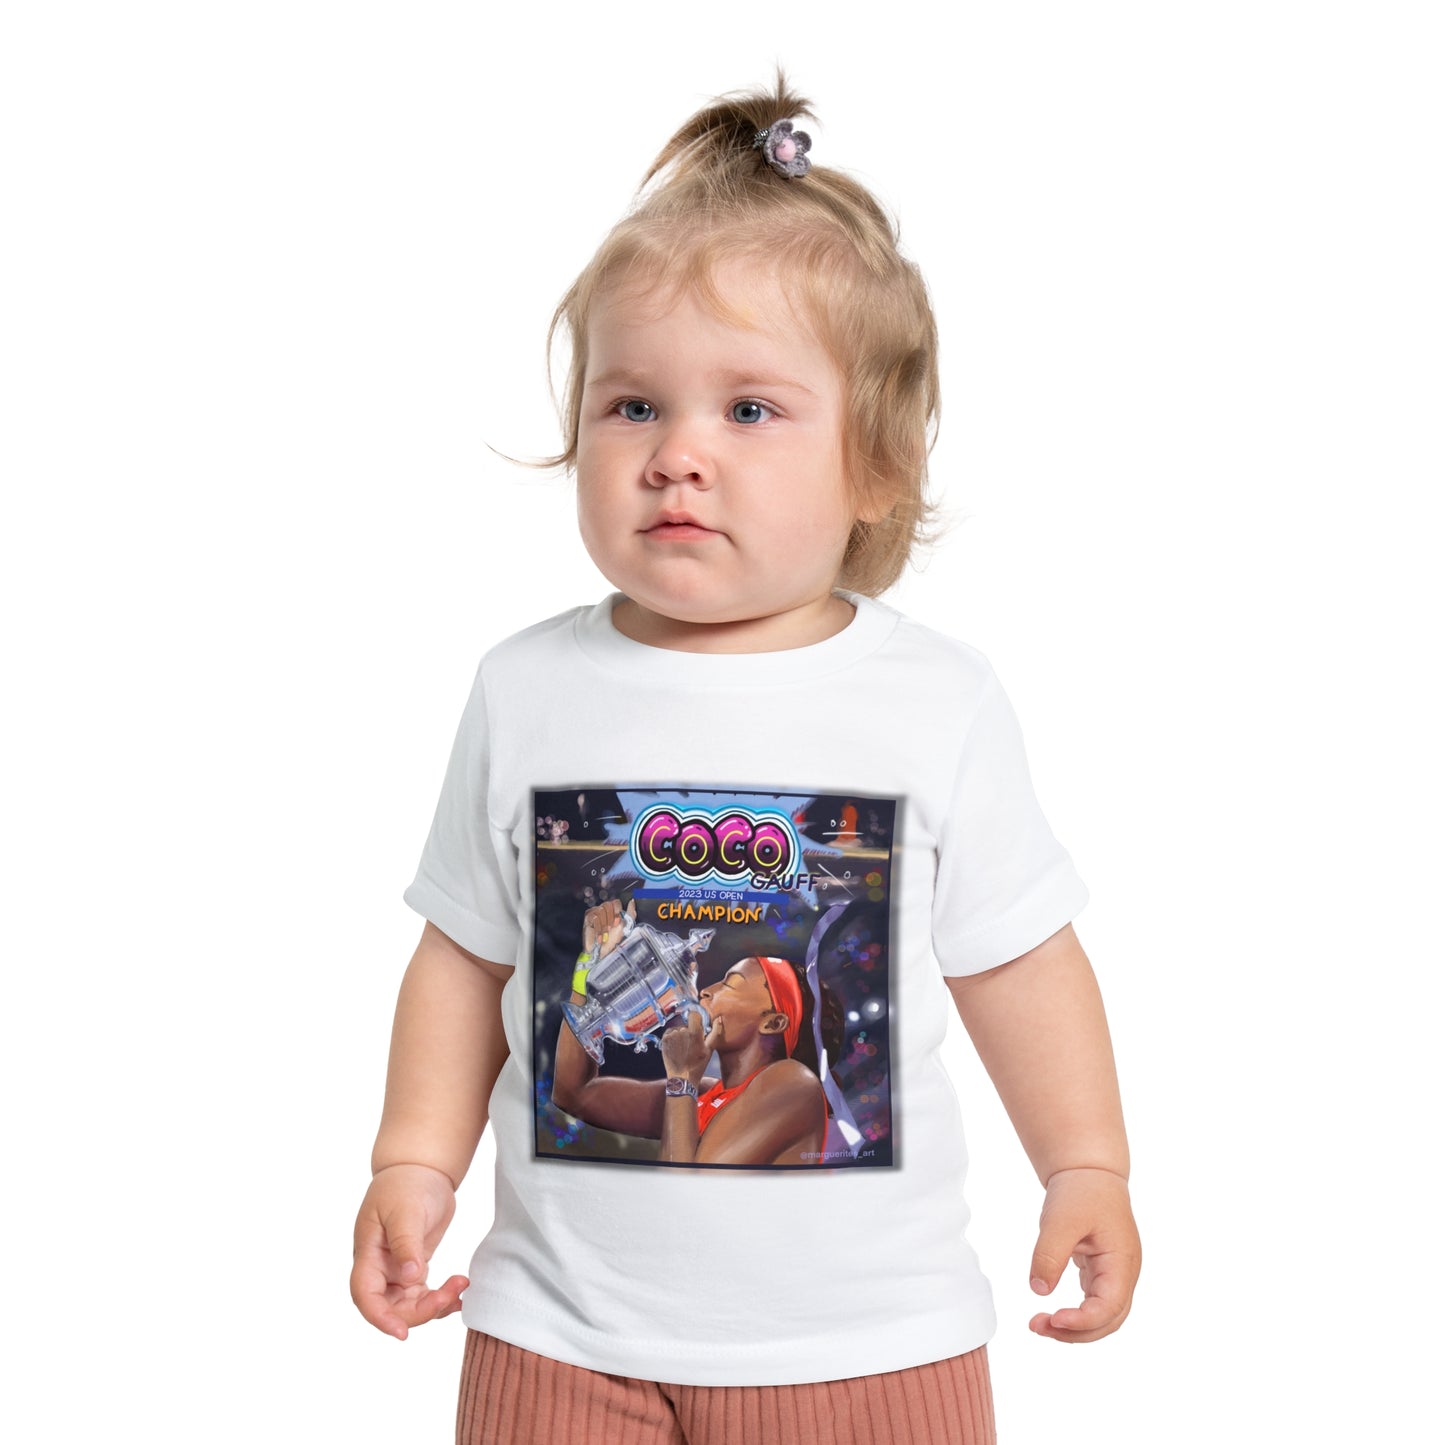 Celebrating Tennis Champ Coco Gauff - Baby Short Sleeve T-Shirt